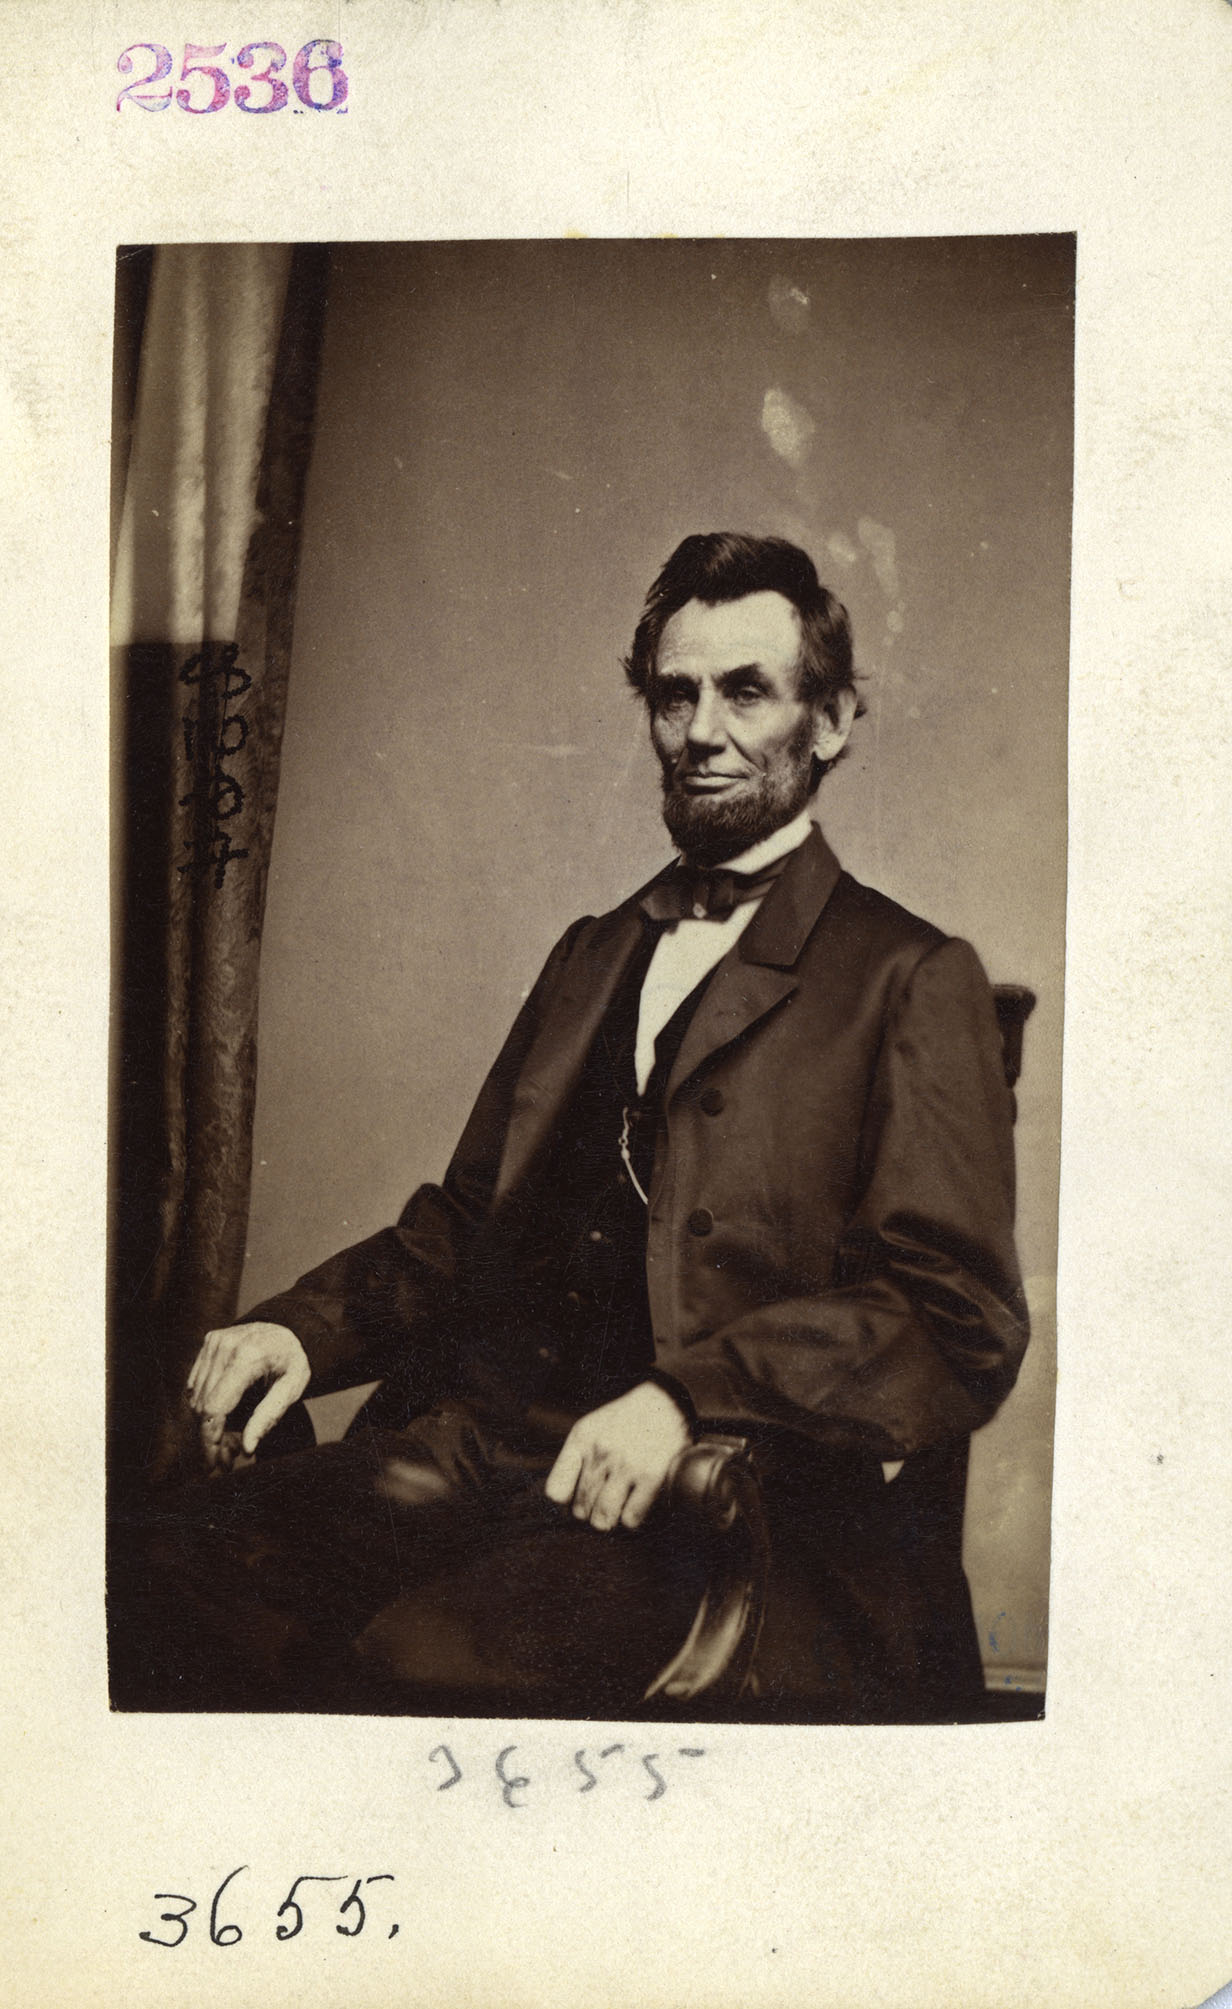 Mathew Brady photograph of Abraham Lincoln